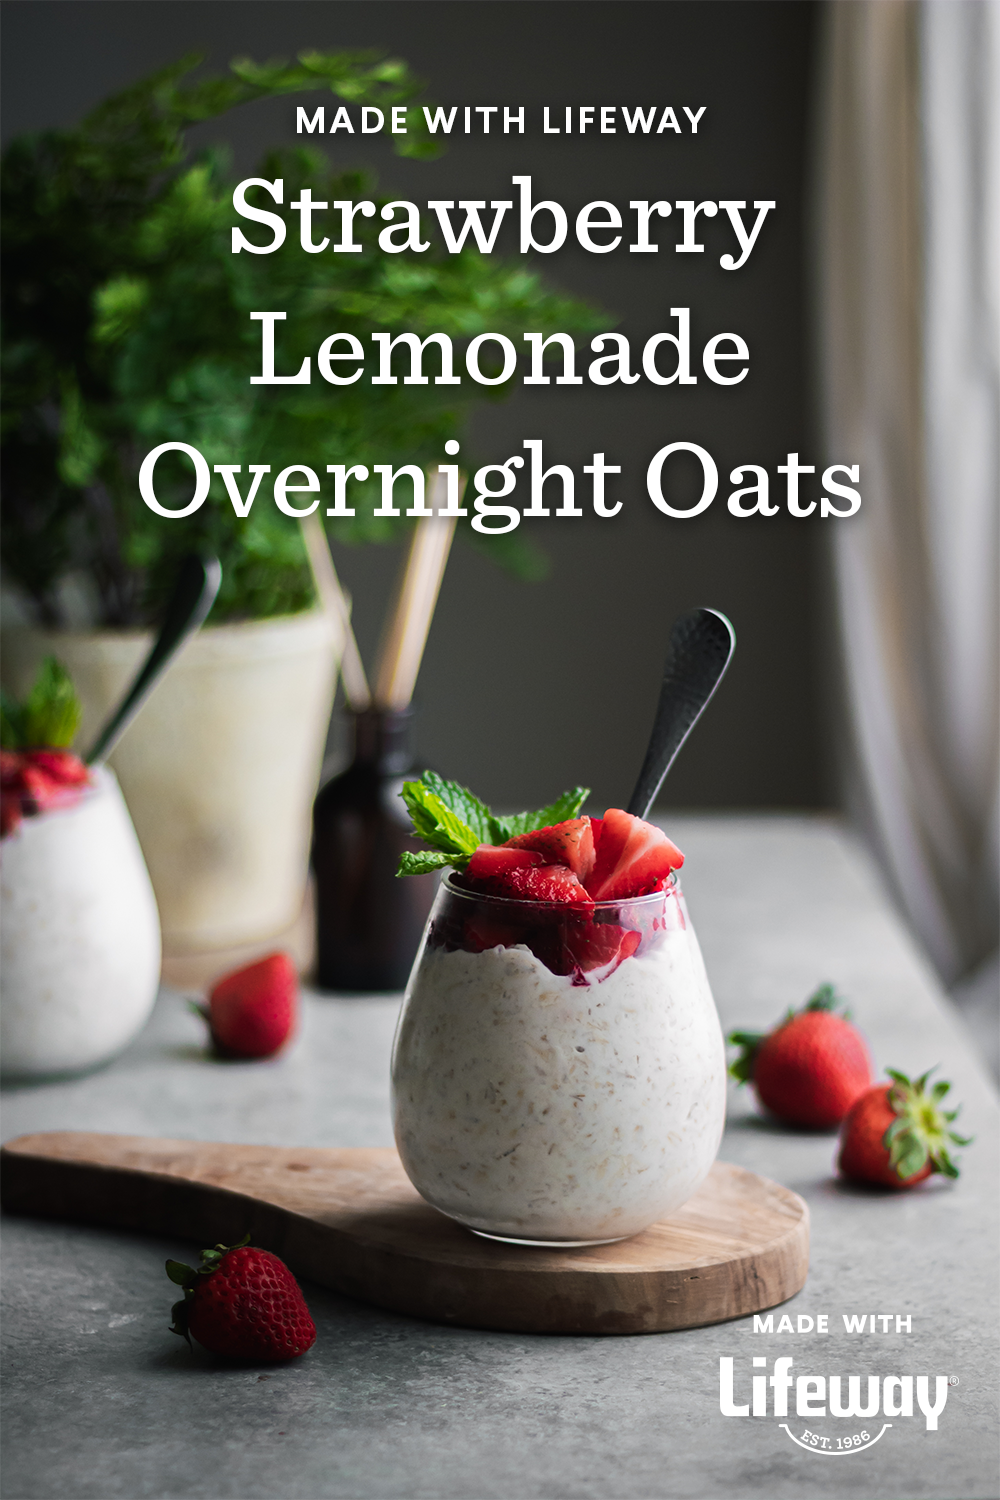 Strawberry Lemonade Overnight Oats
